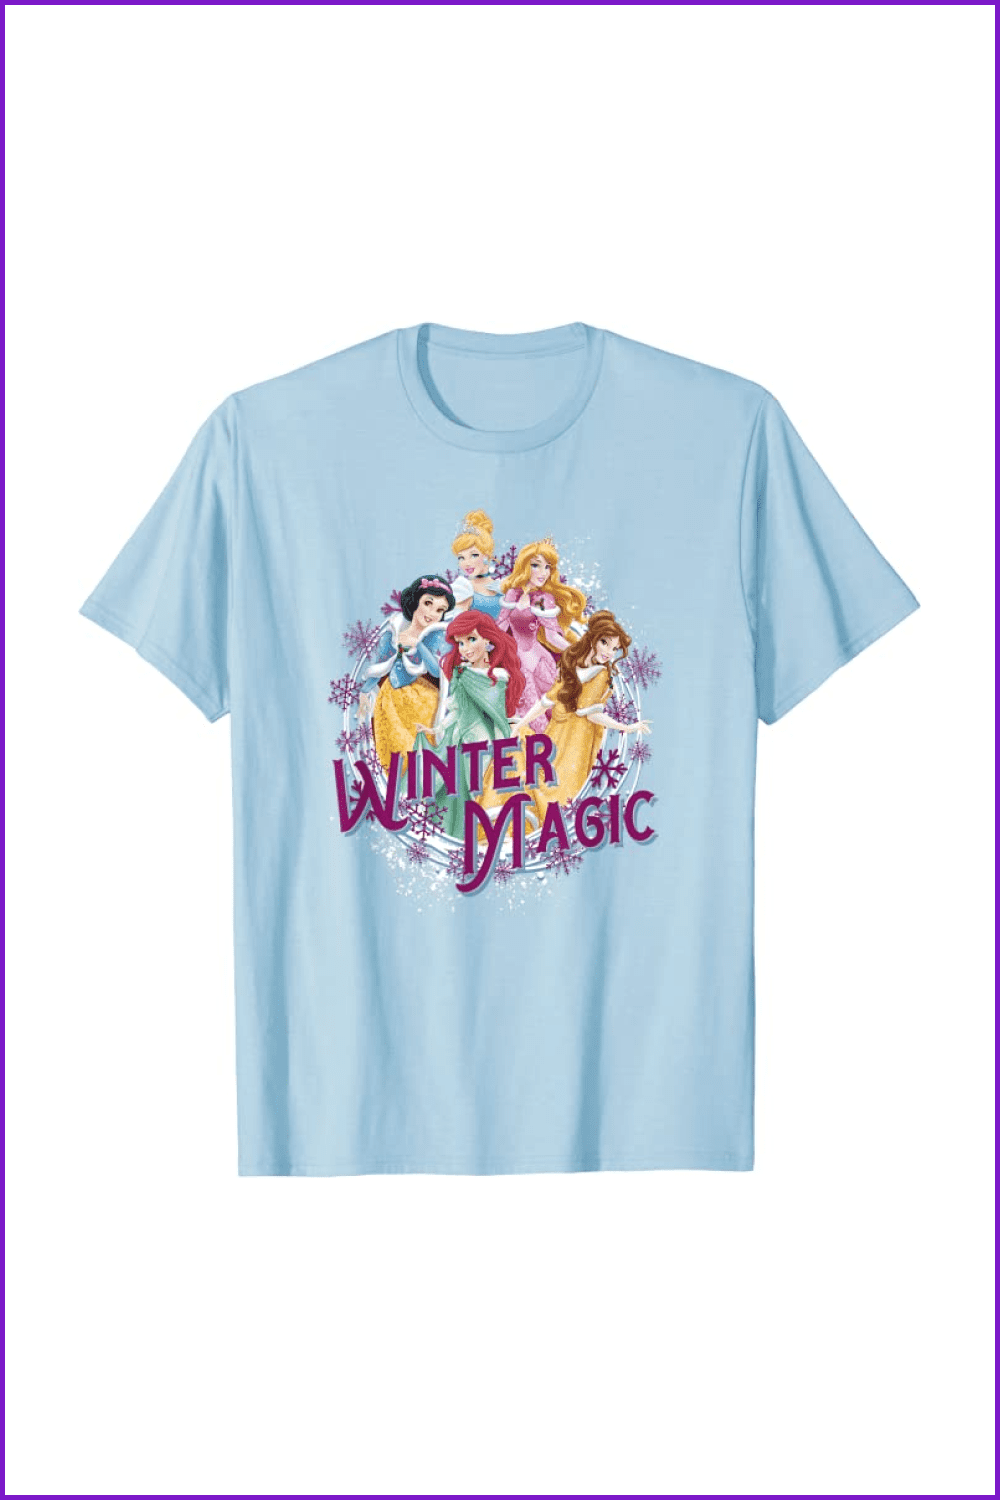 T-Shirt with Disney's princesses.